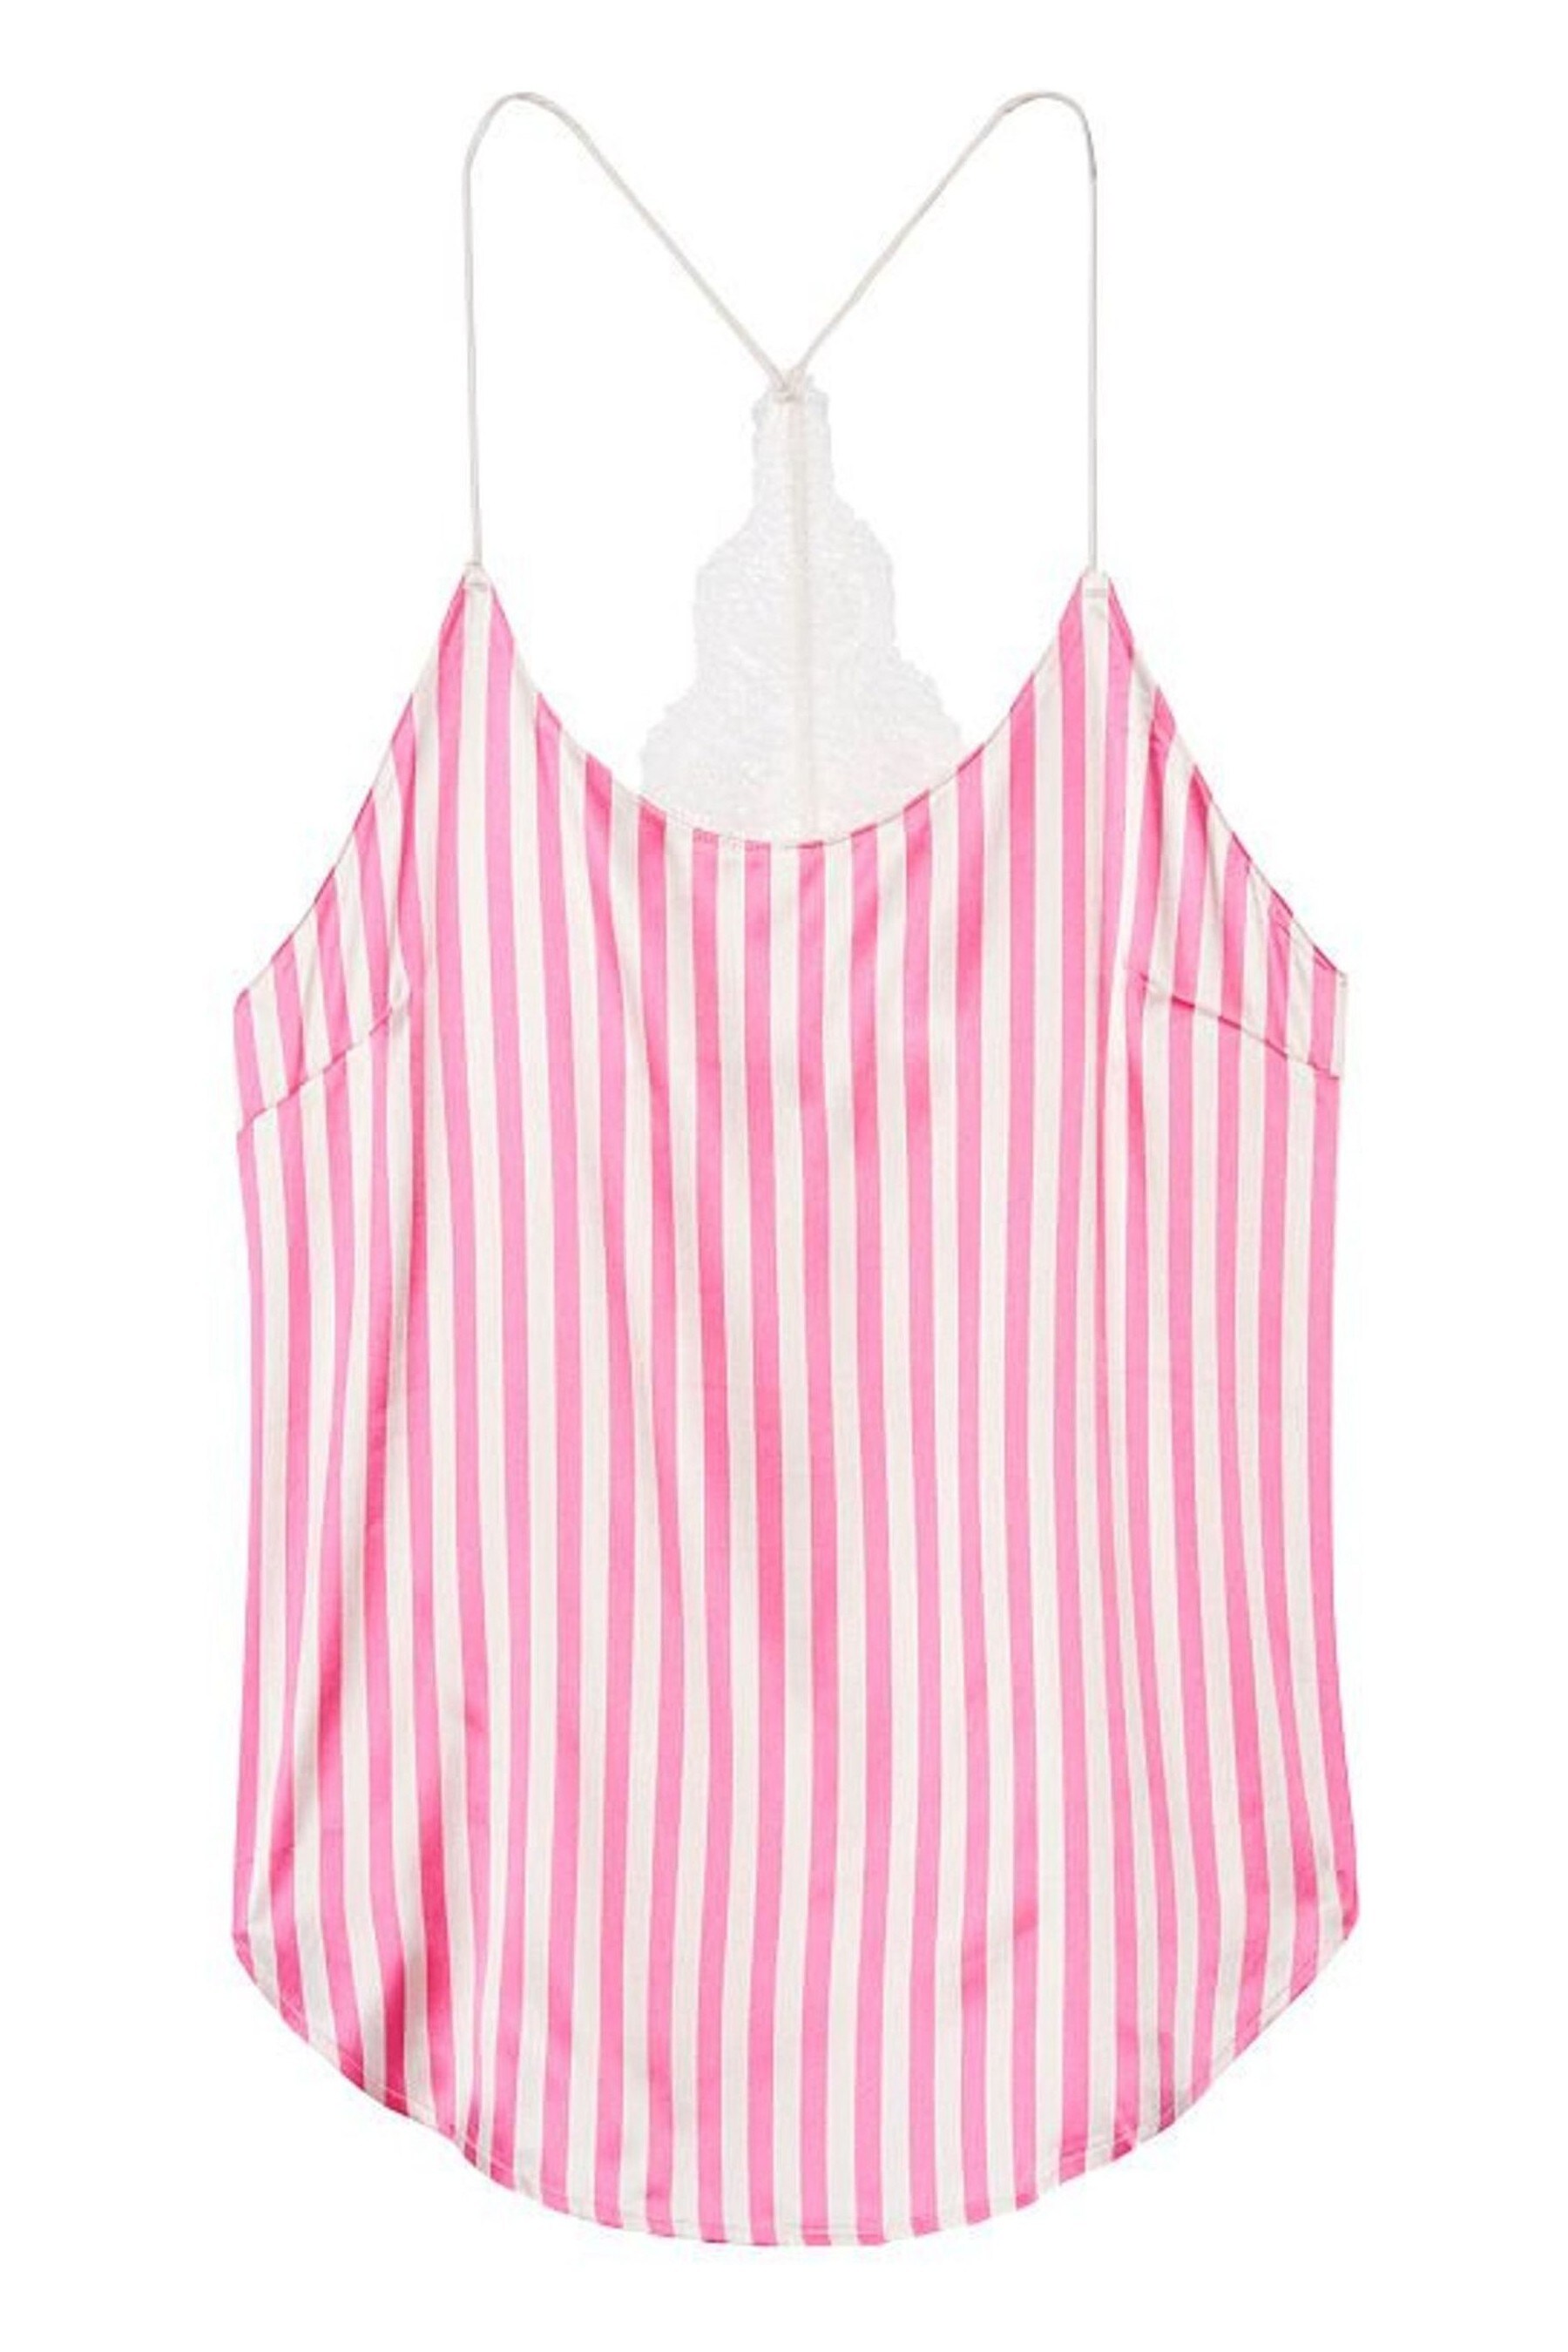 Buy Victoria's Secret Satin Lace Racerback Cami Pyjama Top from the ...